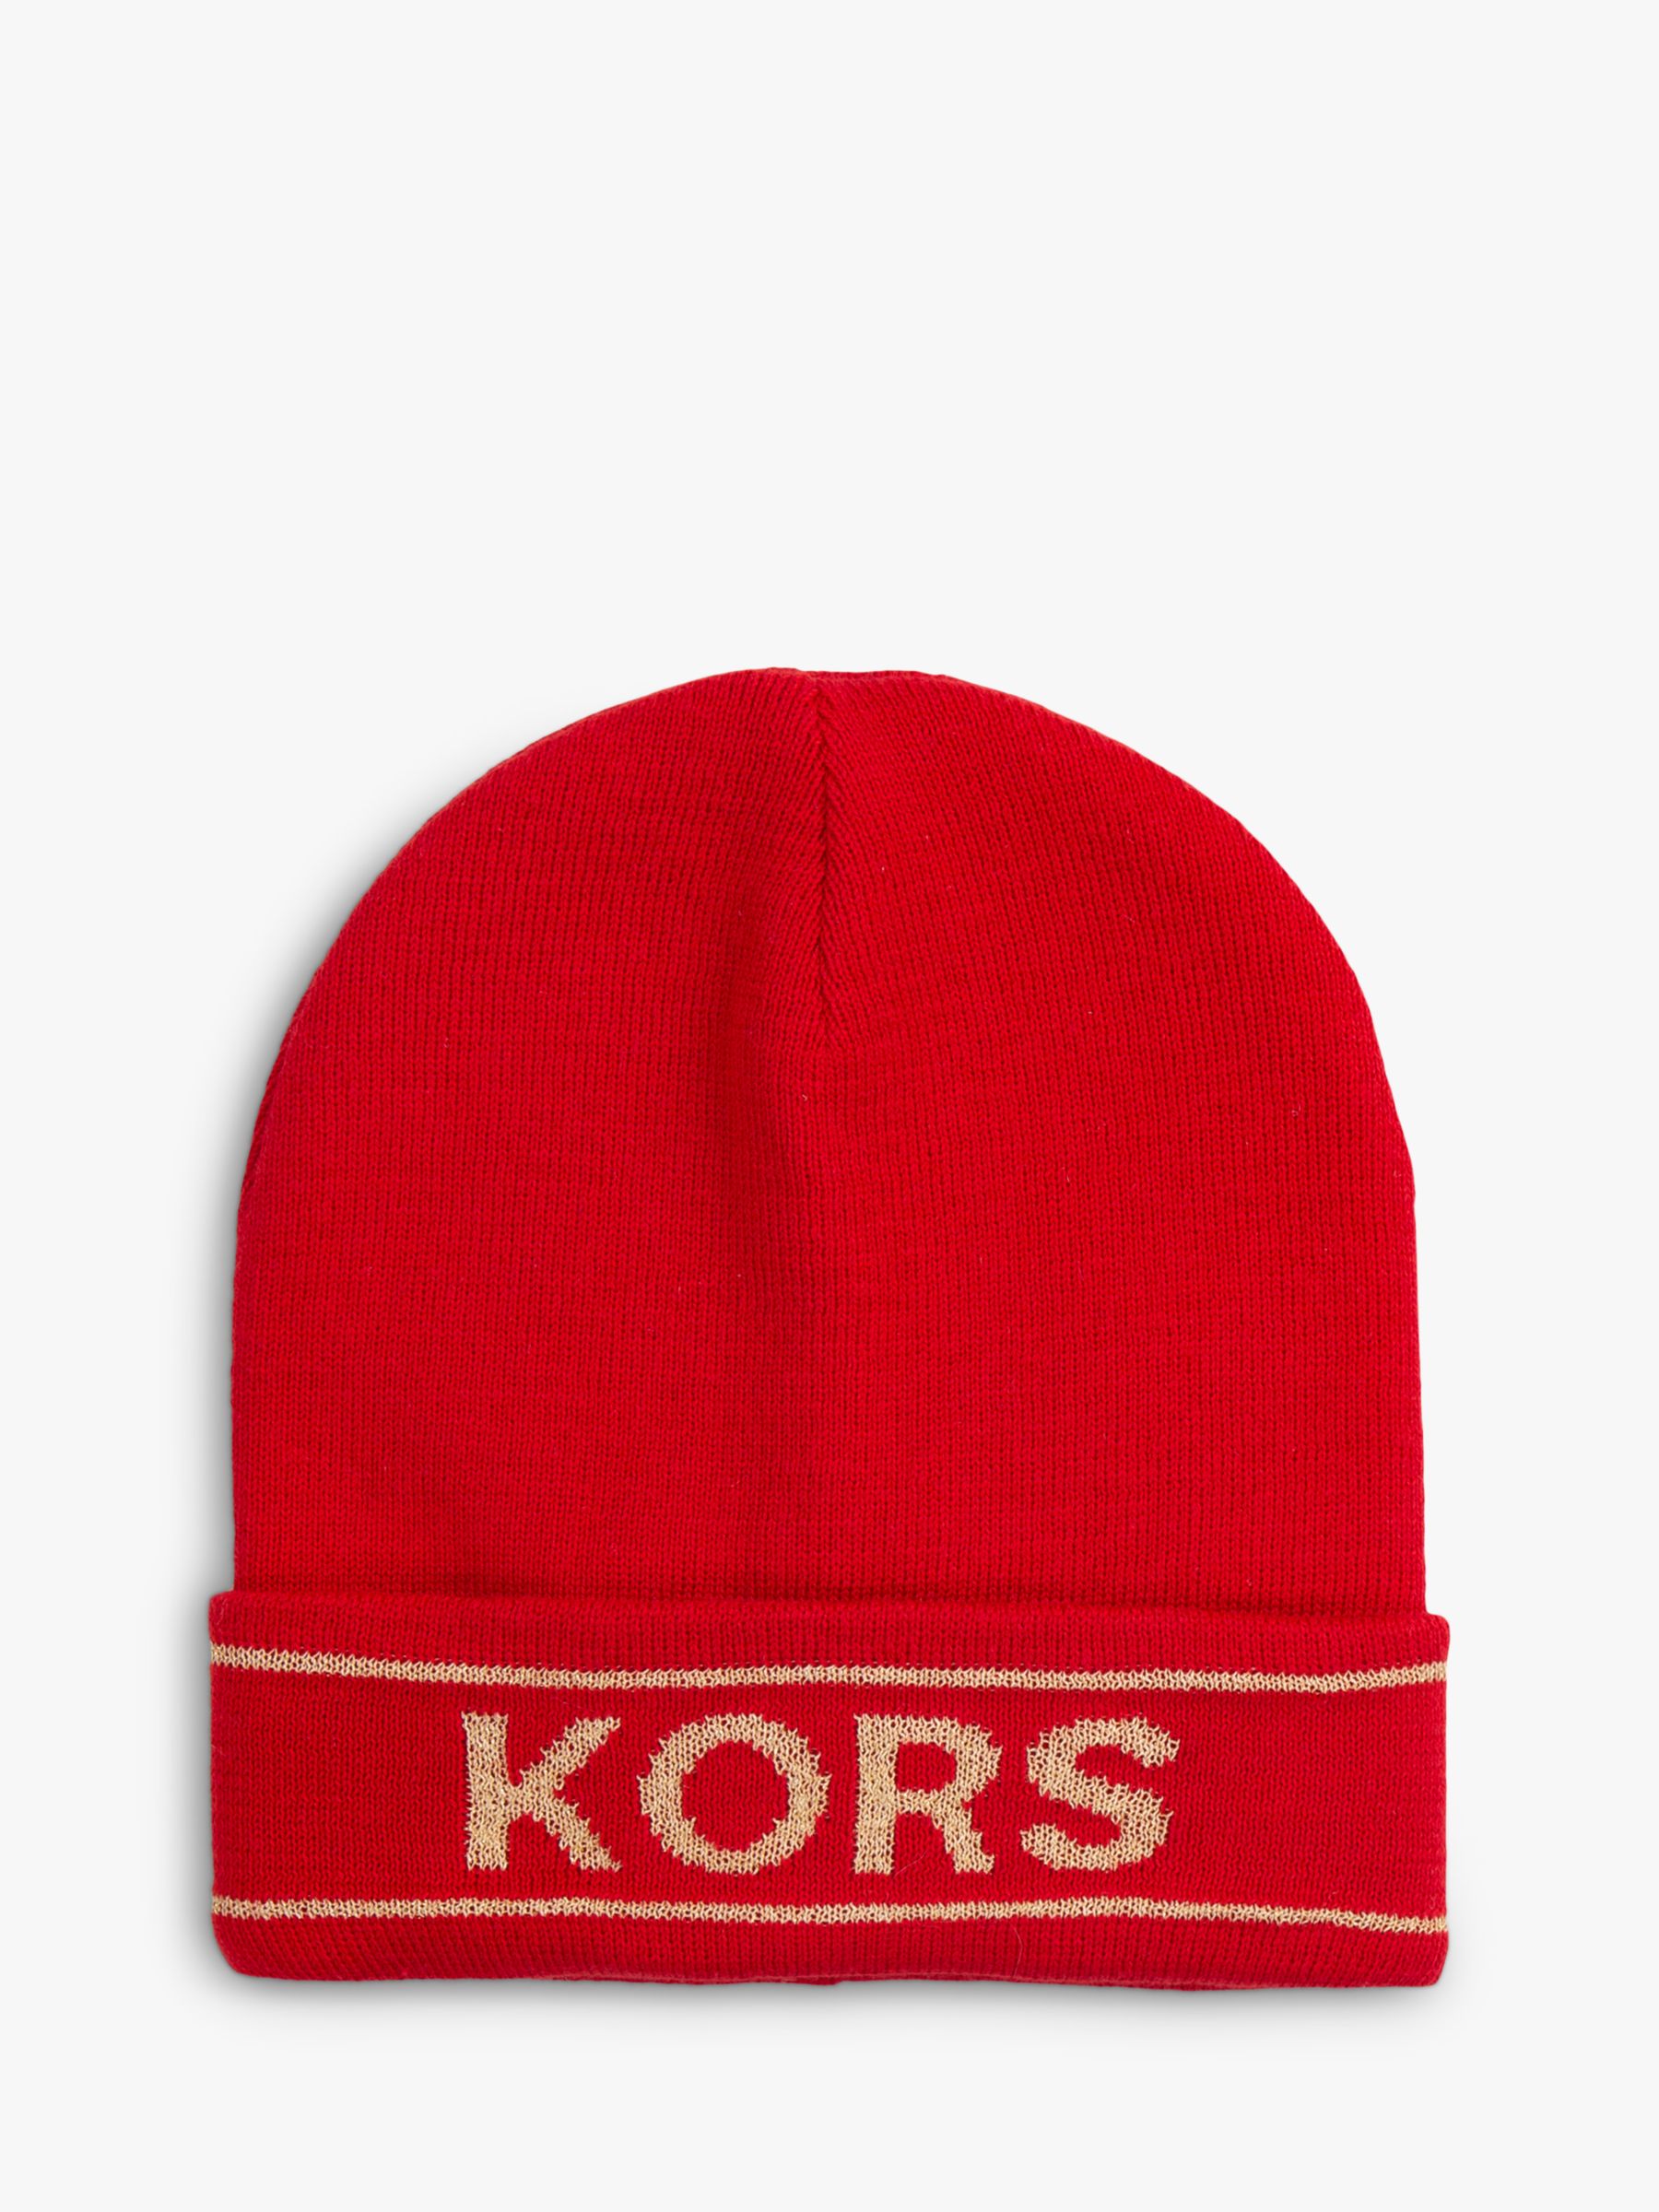 Michael Kors Kids' Logo Turn Up Beanie Hat, Bright Red, 8-12 years